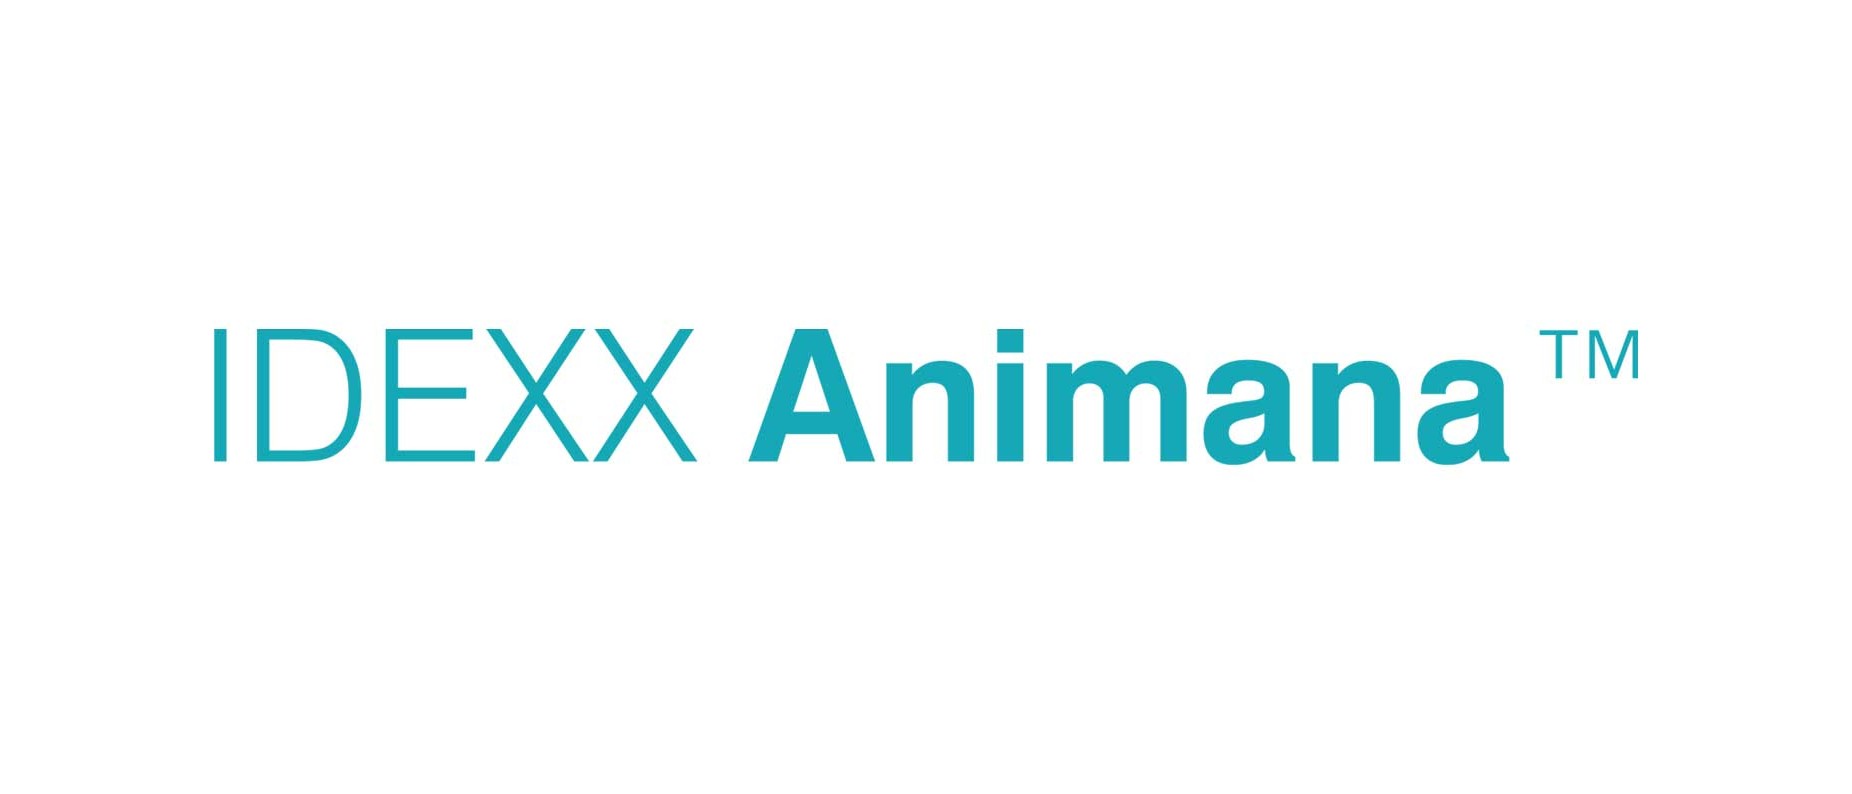 Idexx Animana PIMs Logo